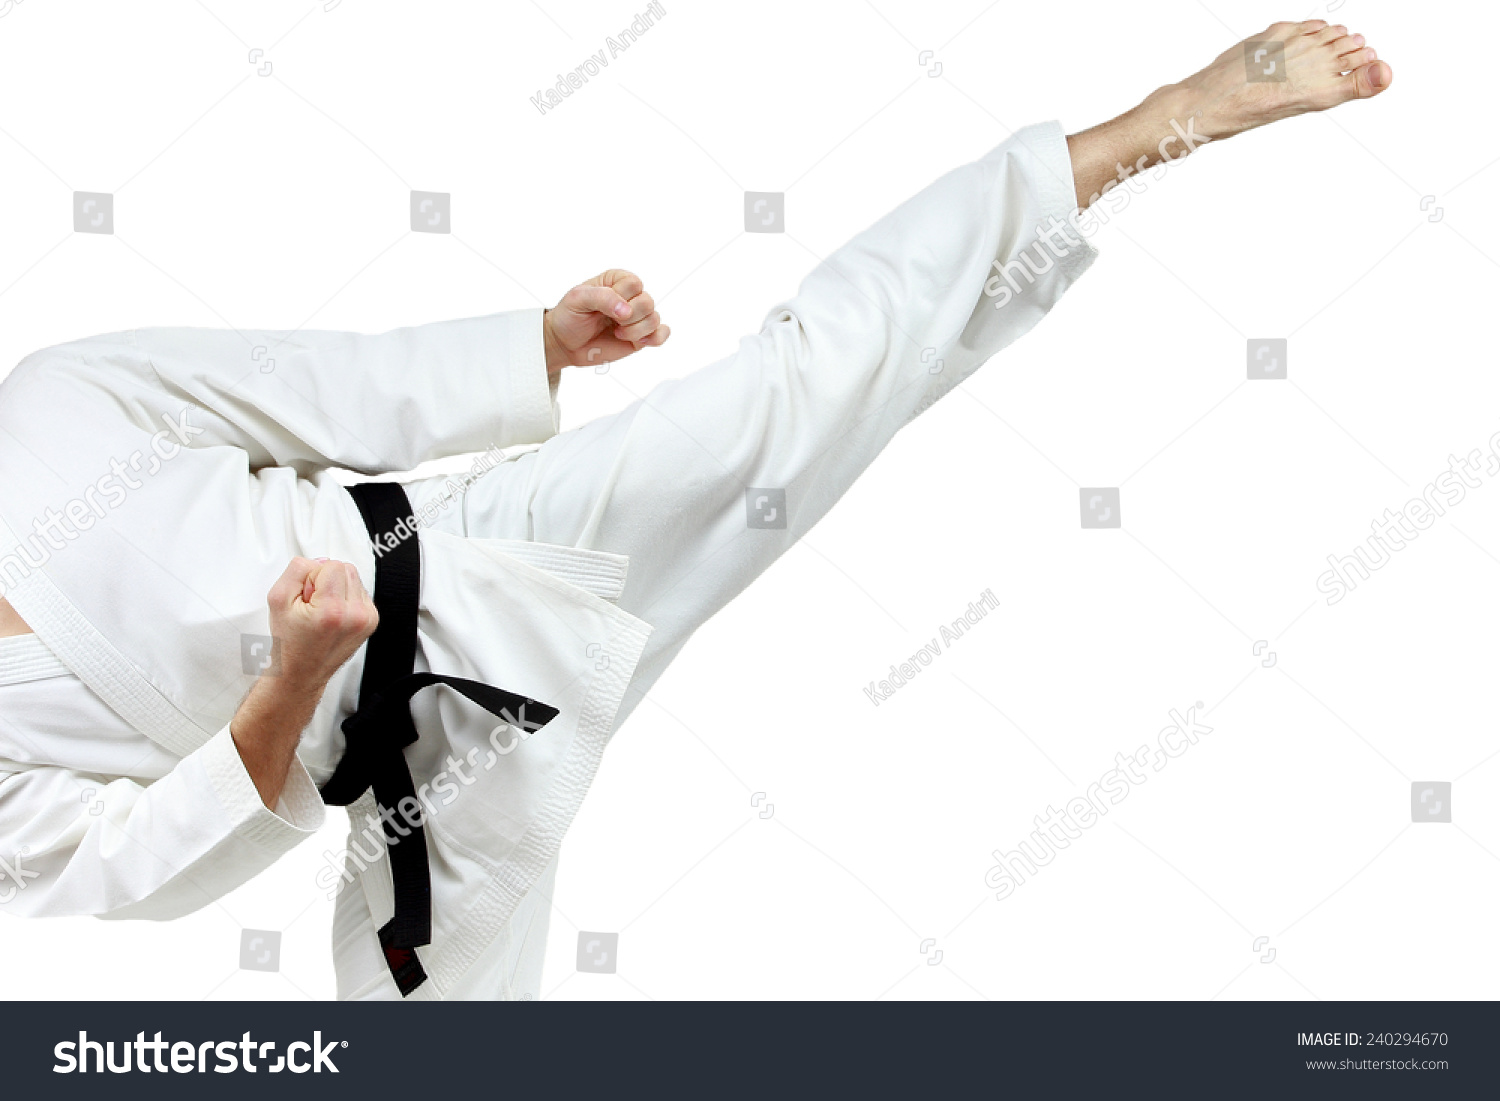 Mawashi geri kick is doing sportsman in a white karategi #240294670